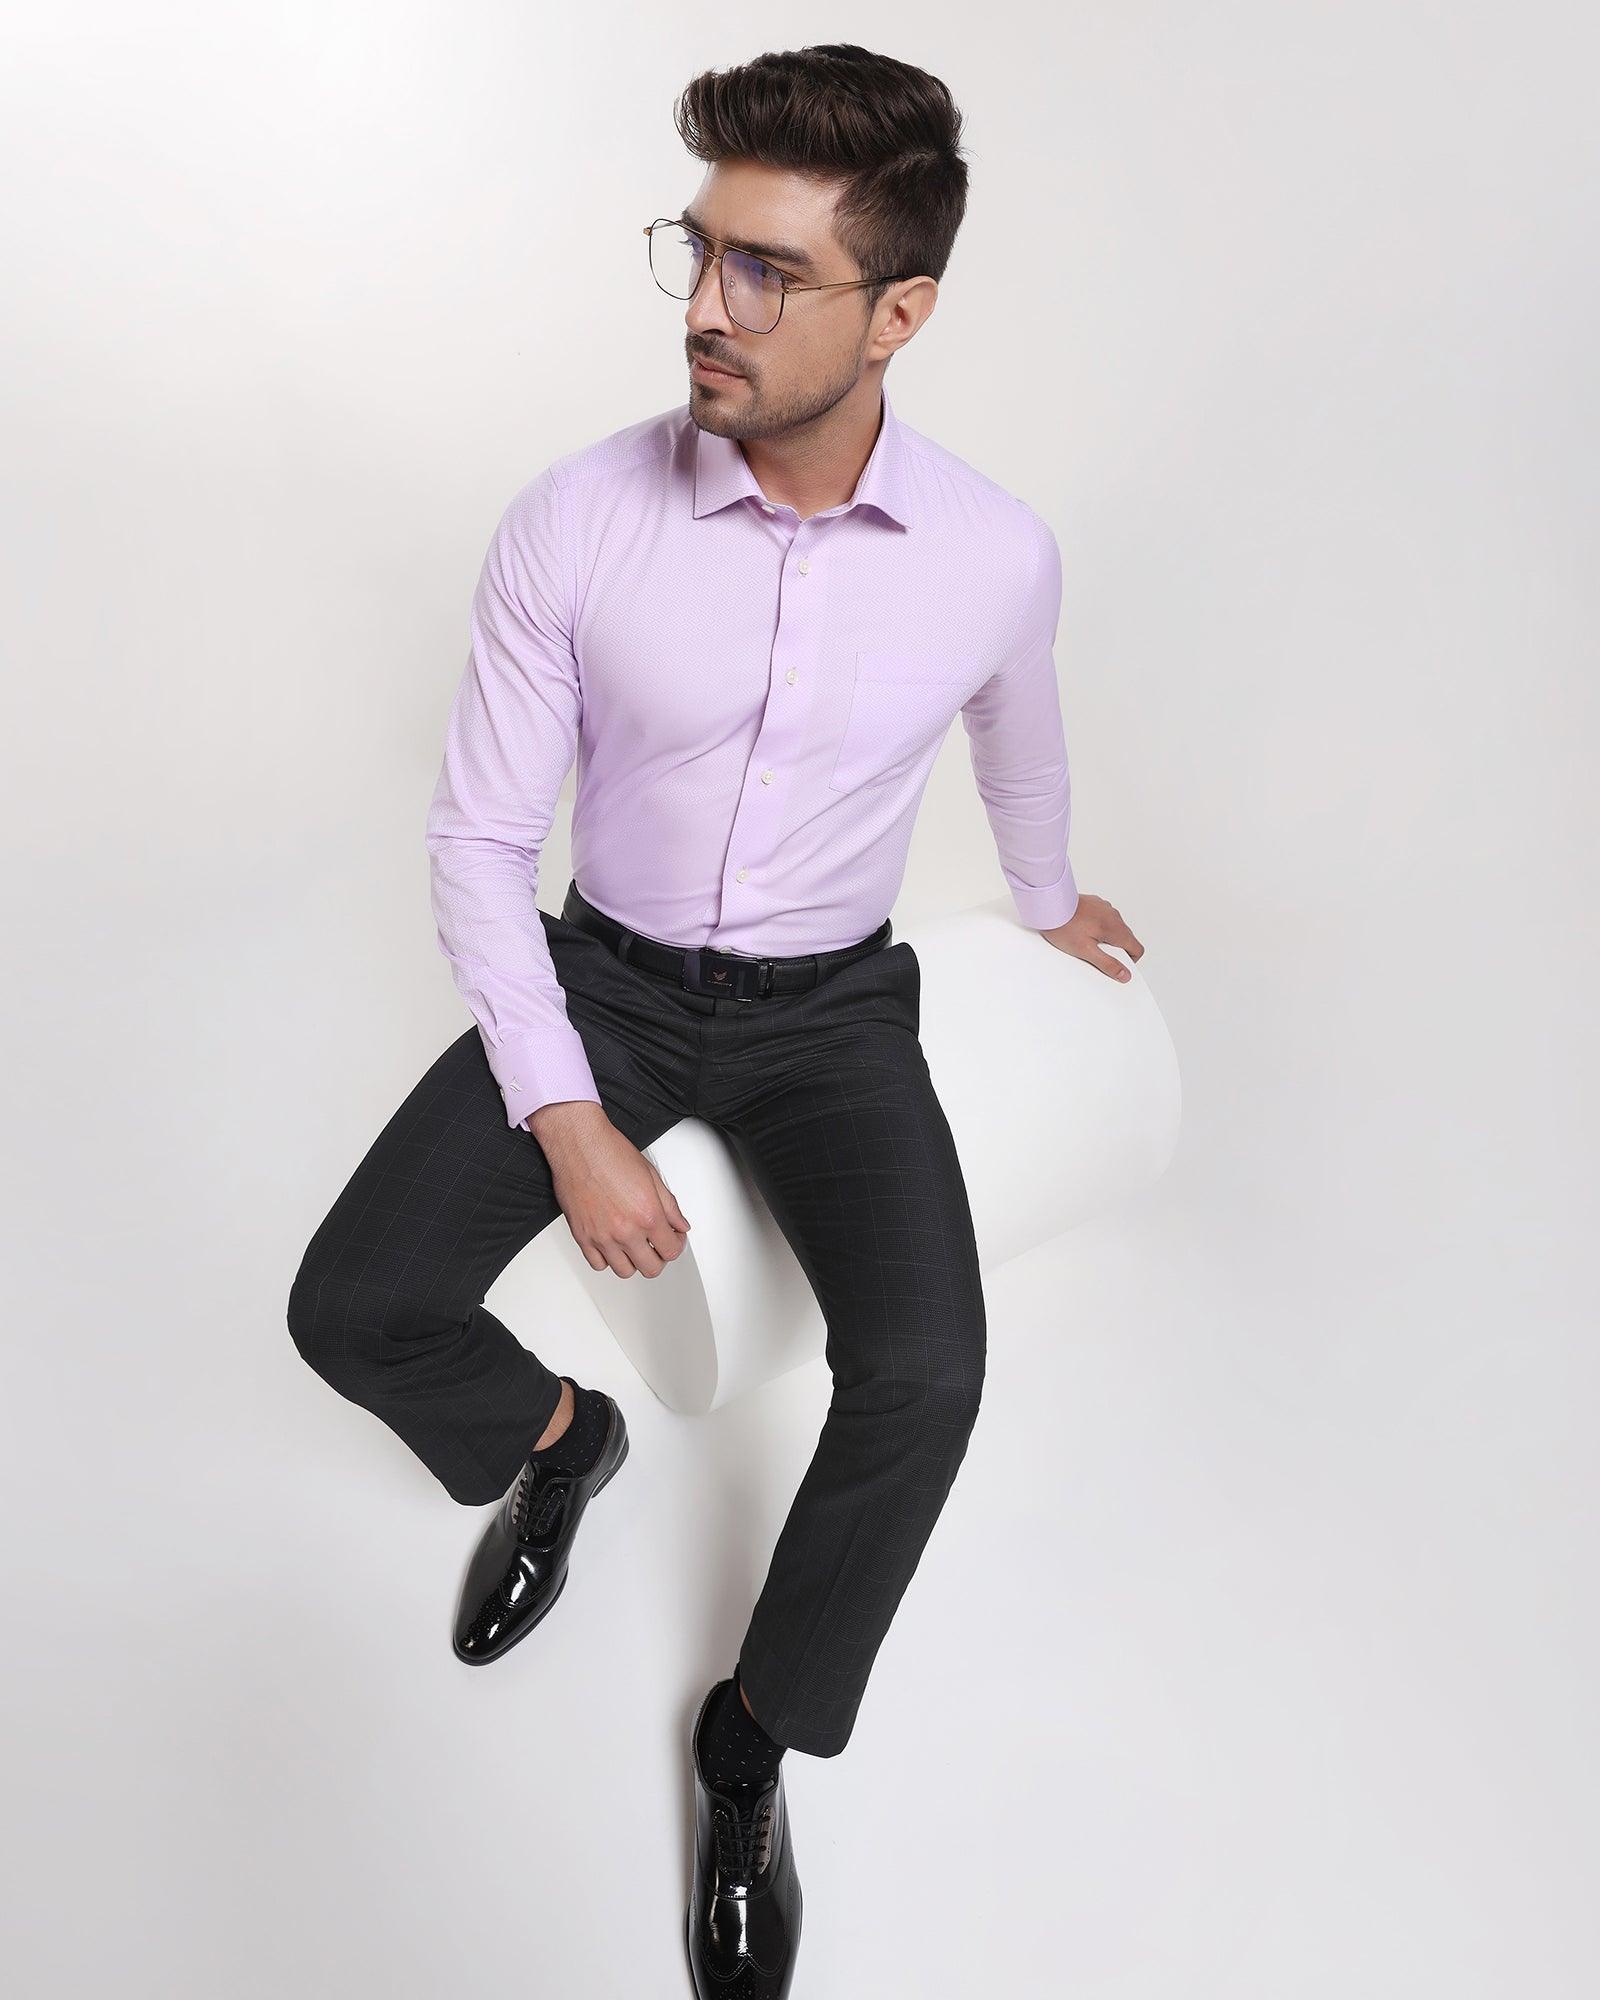 Medium Checks Men Purple Cotton Casual Check Shirt, Full Sleeves at Rs 250  in Surat